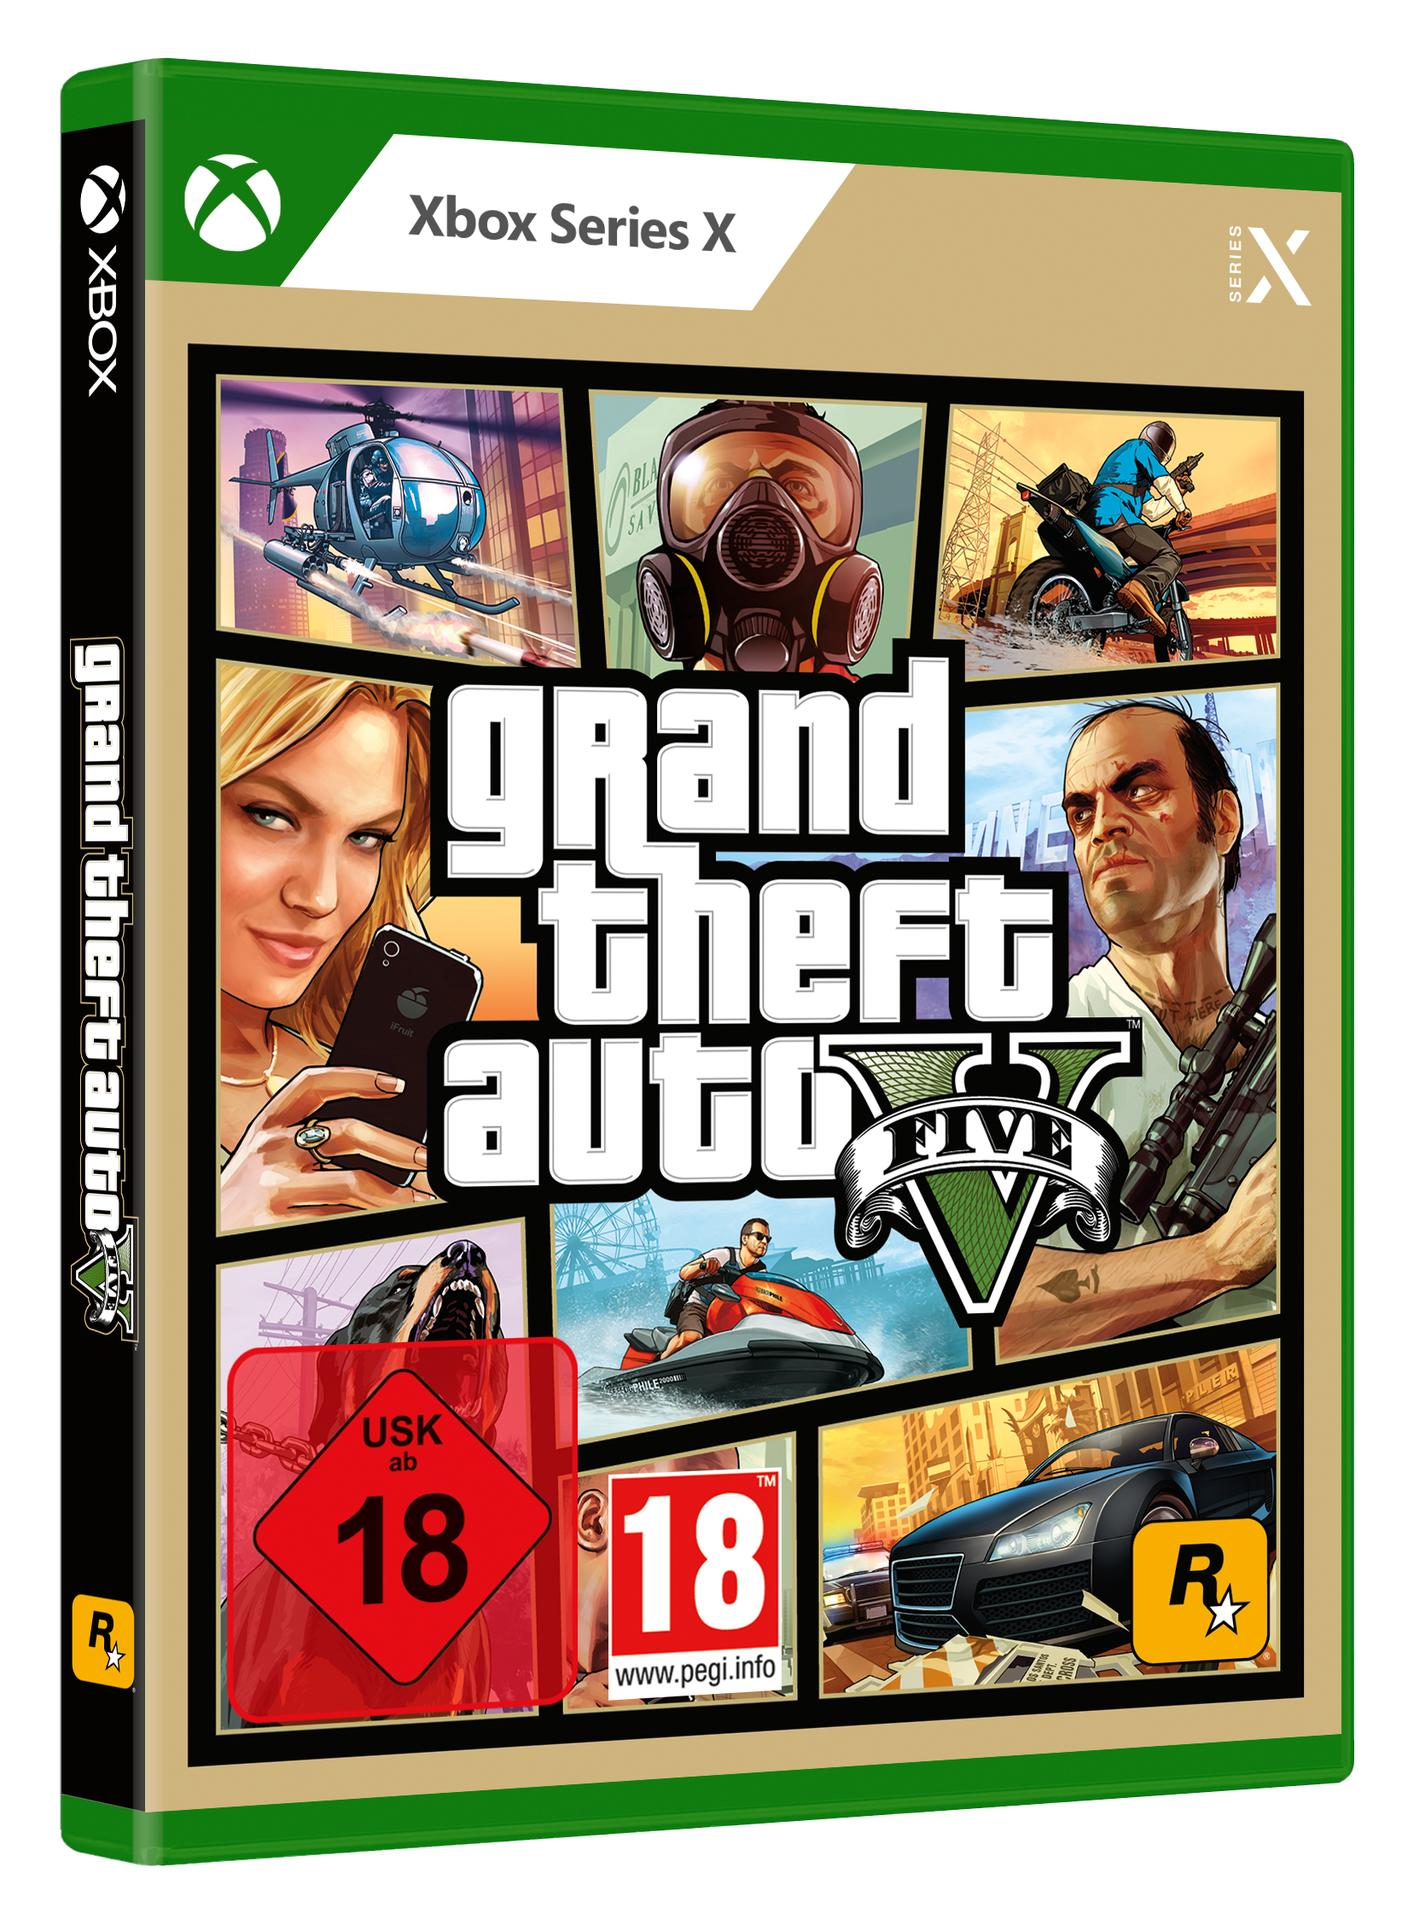 Theft [Xbox GTA Series X] -Grand 5 - V Auto